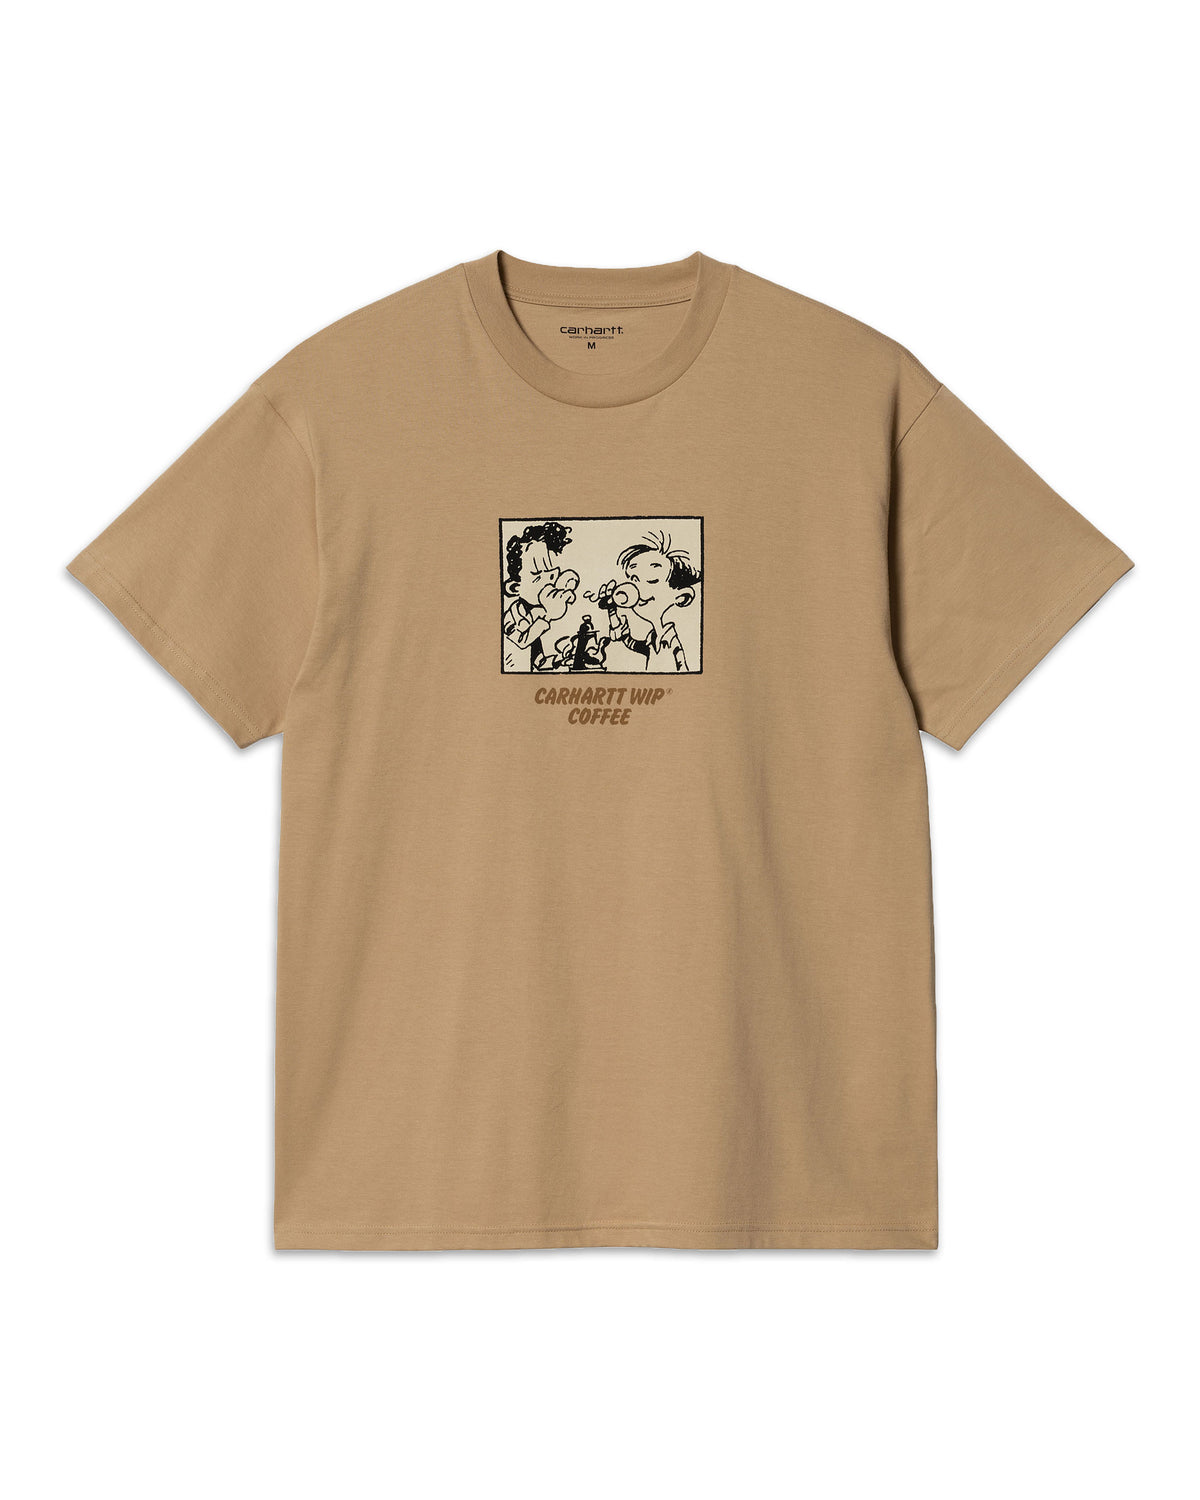 Carhartt Wip Coffee T-shirt Dusty Hamilton Brown